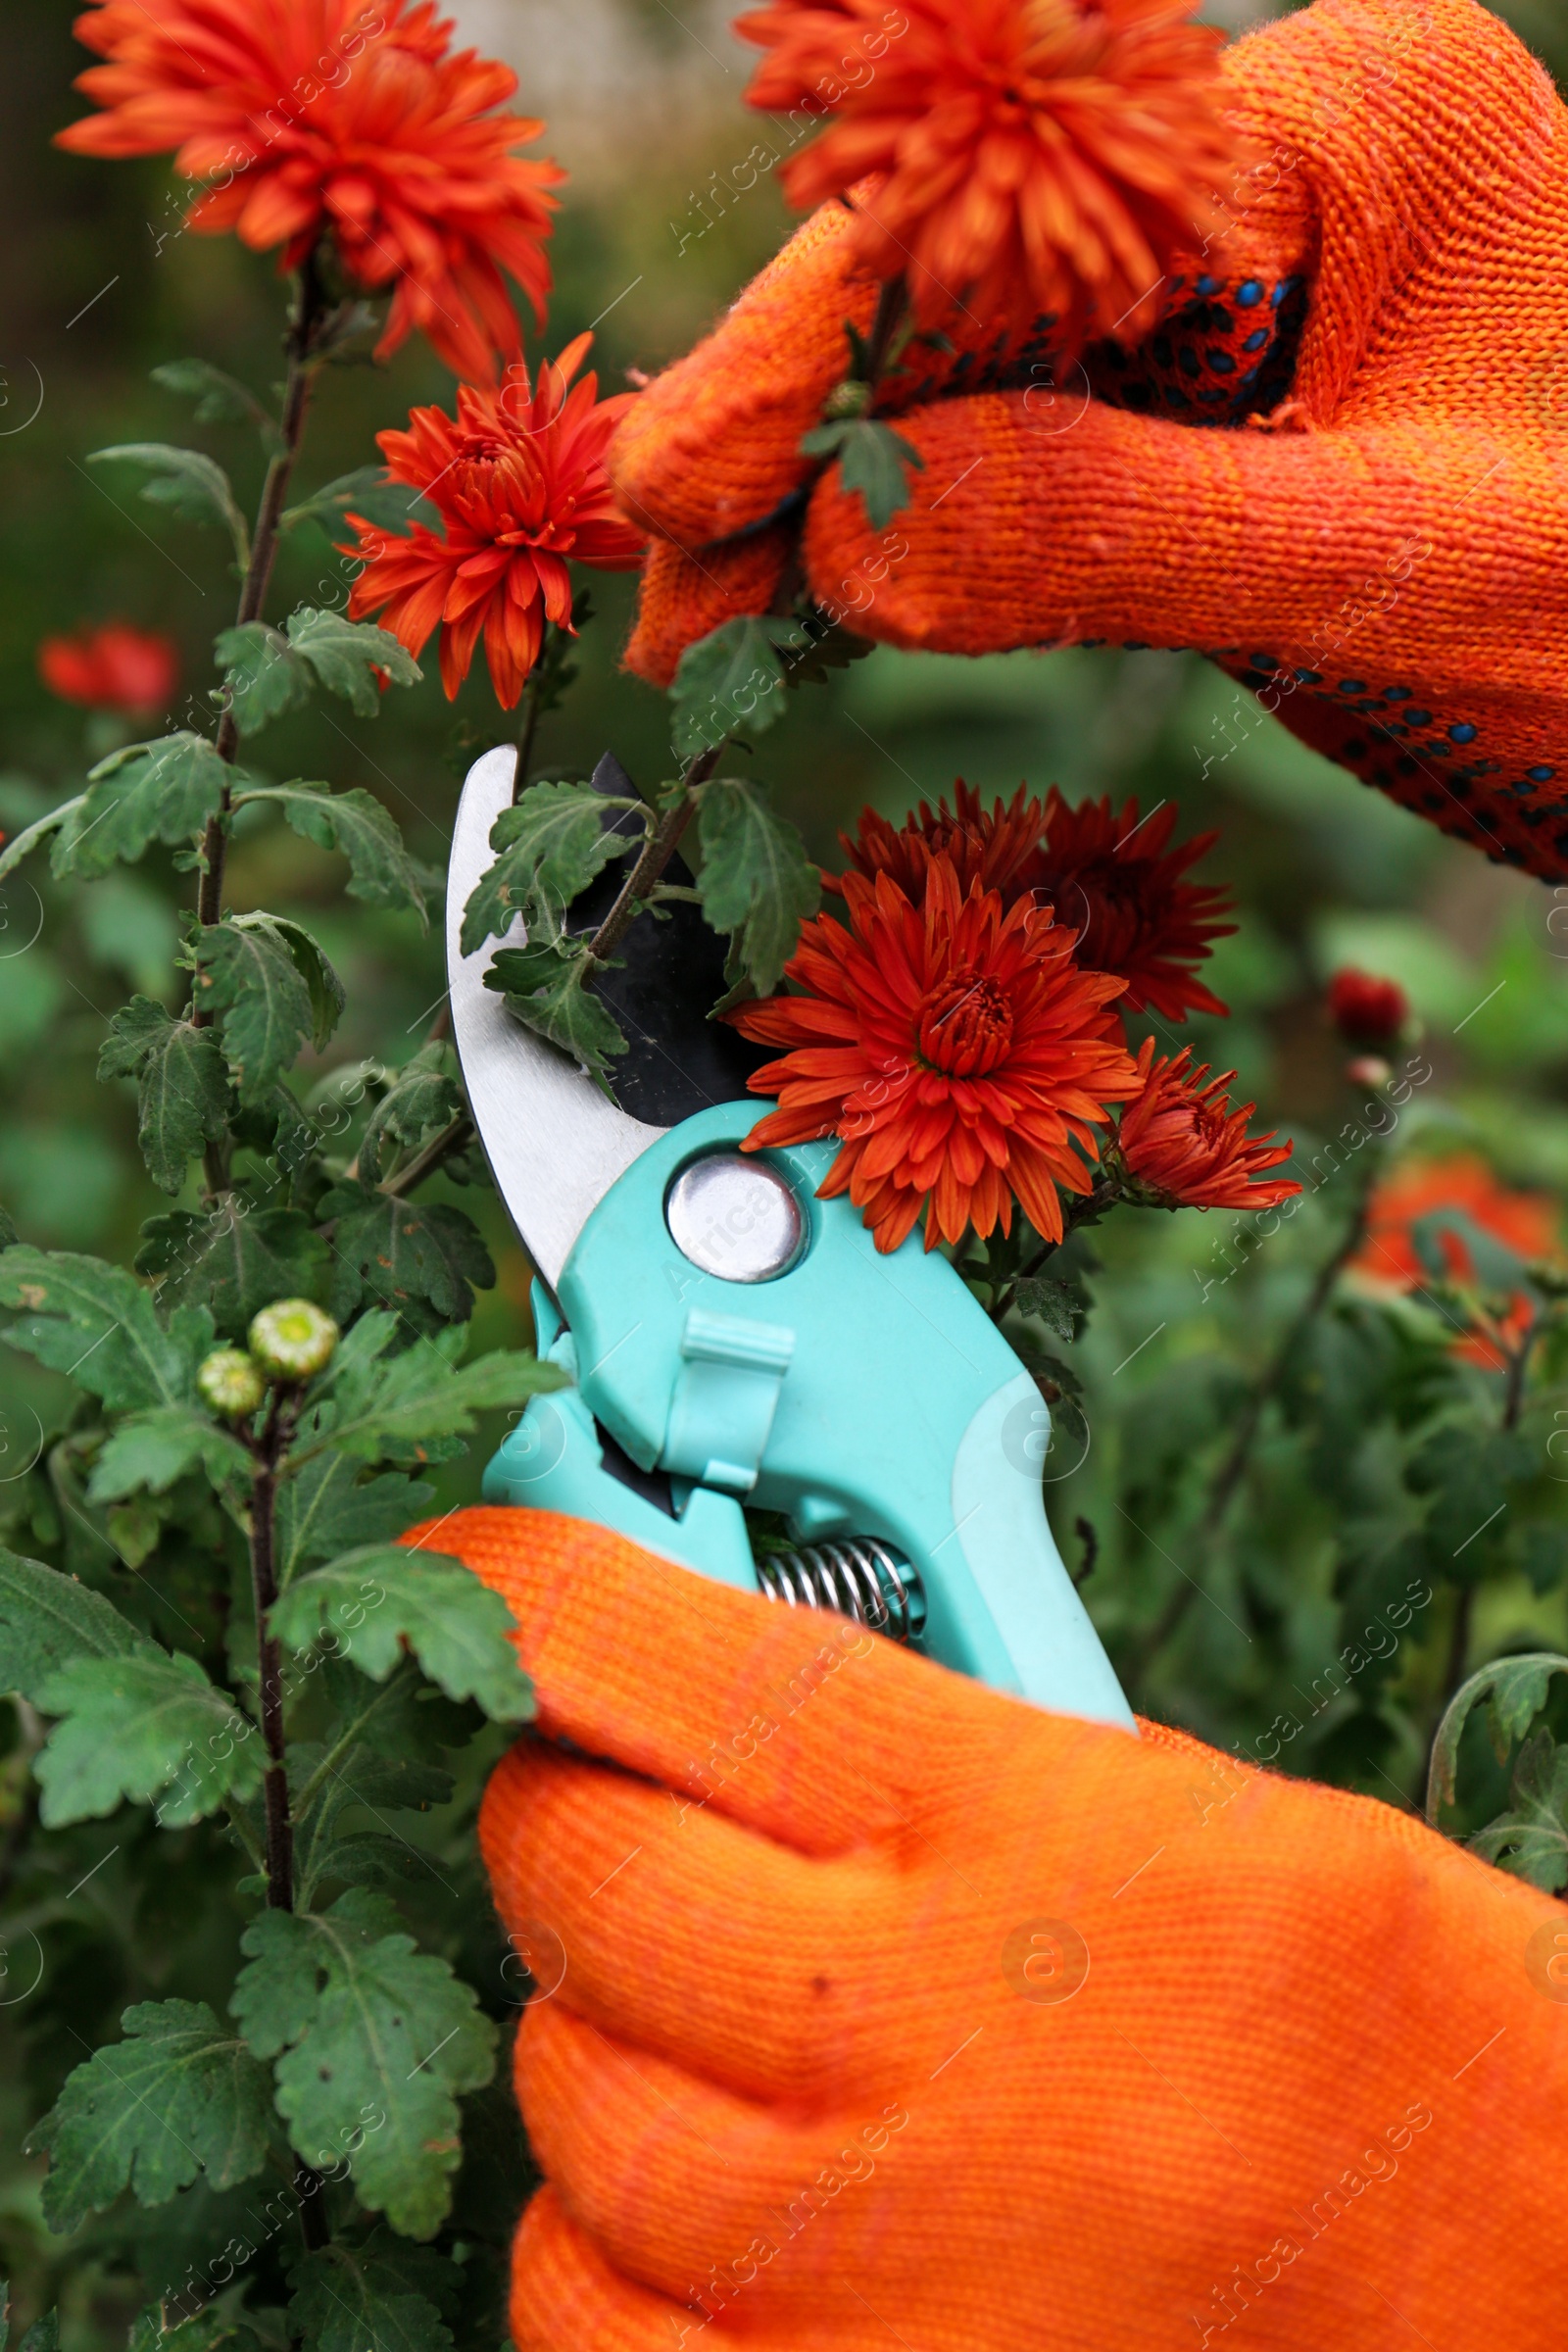 Photo of Woman wearing gloves pruning beautiful chrysanthemum flowers by secateurs in garden, closeup